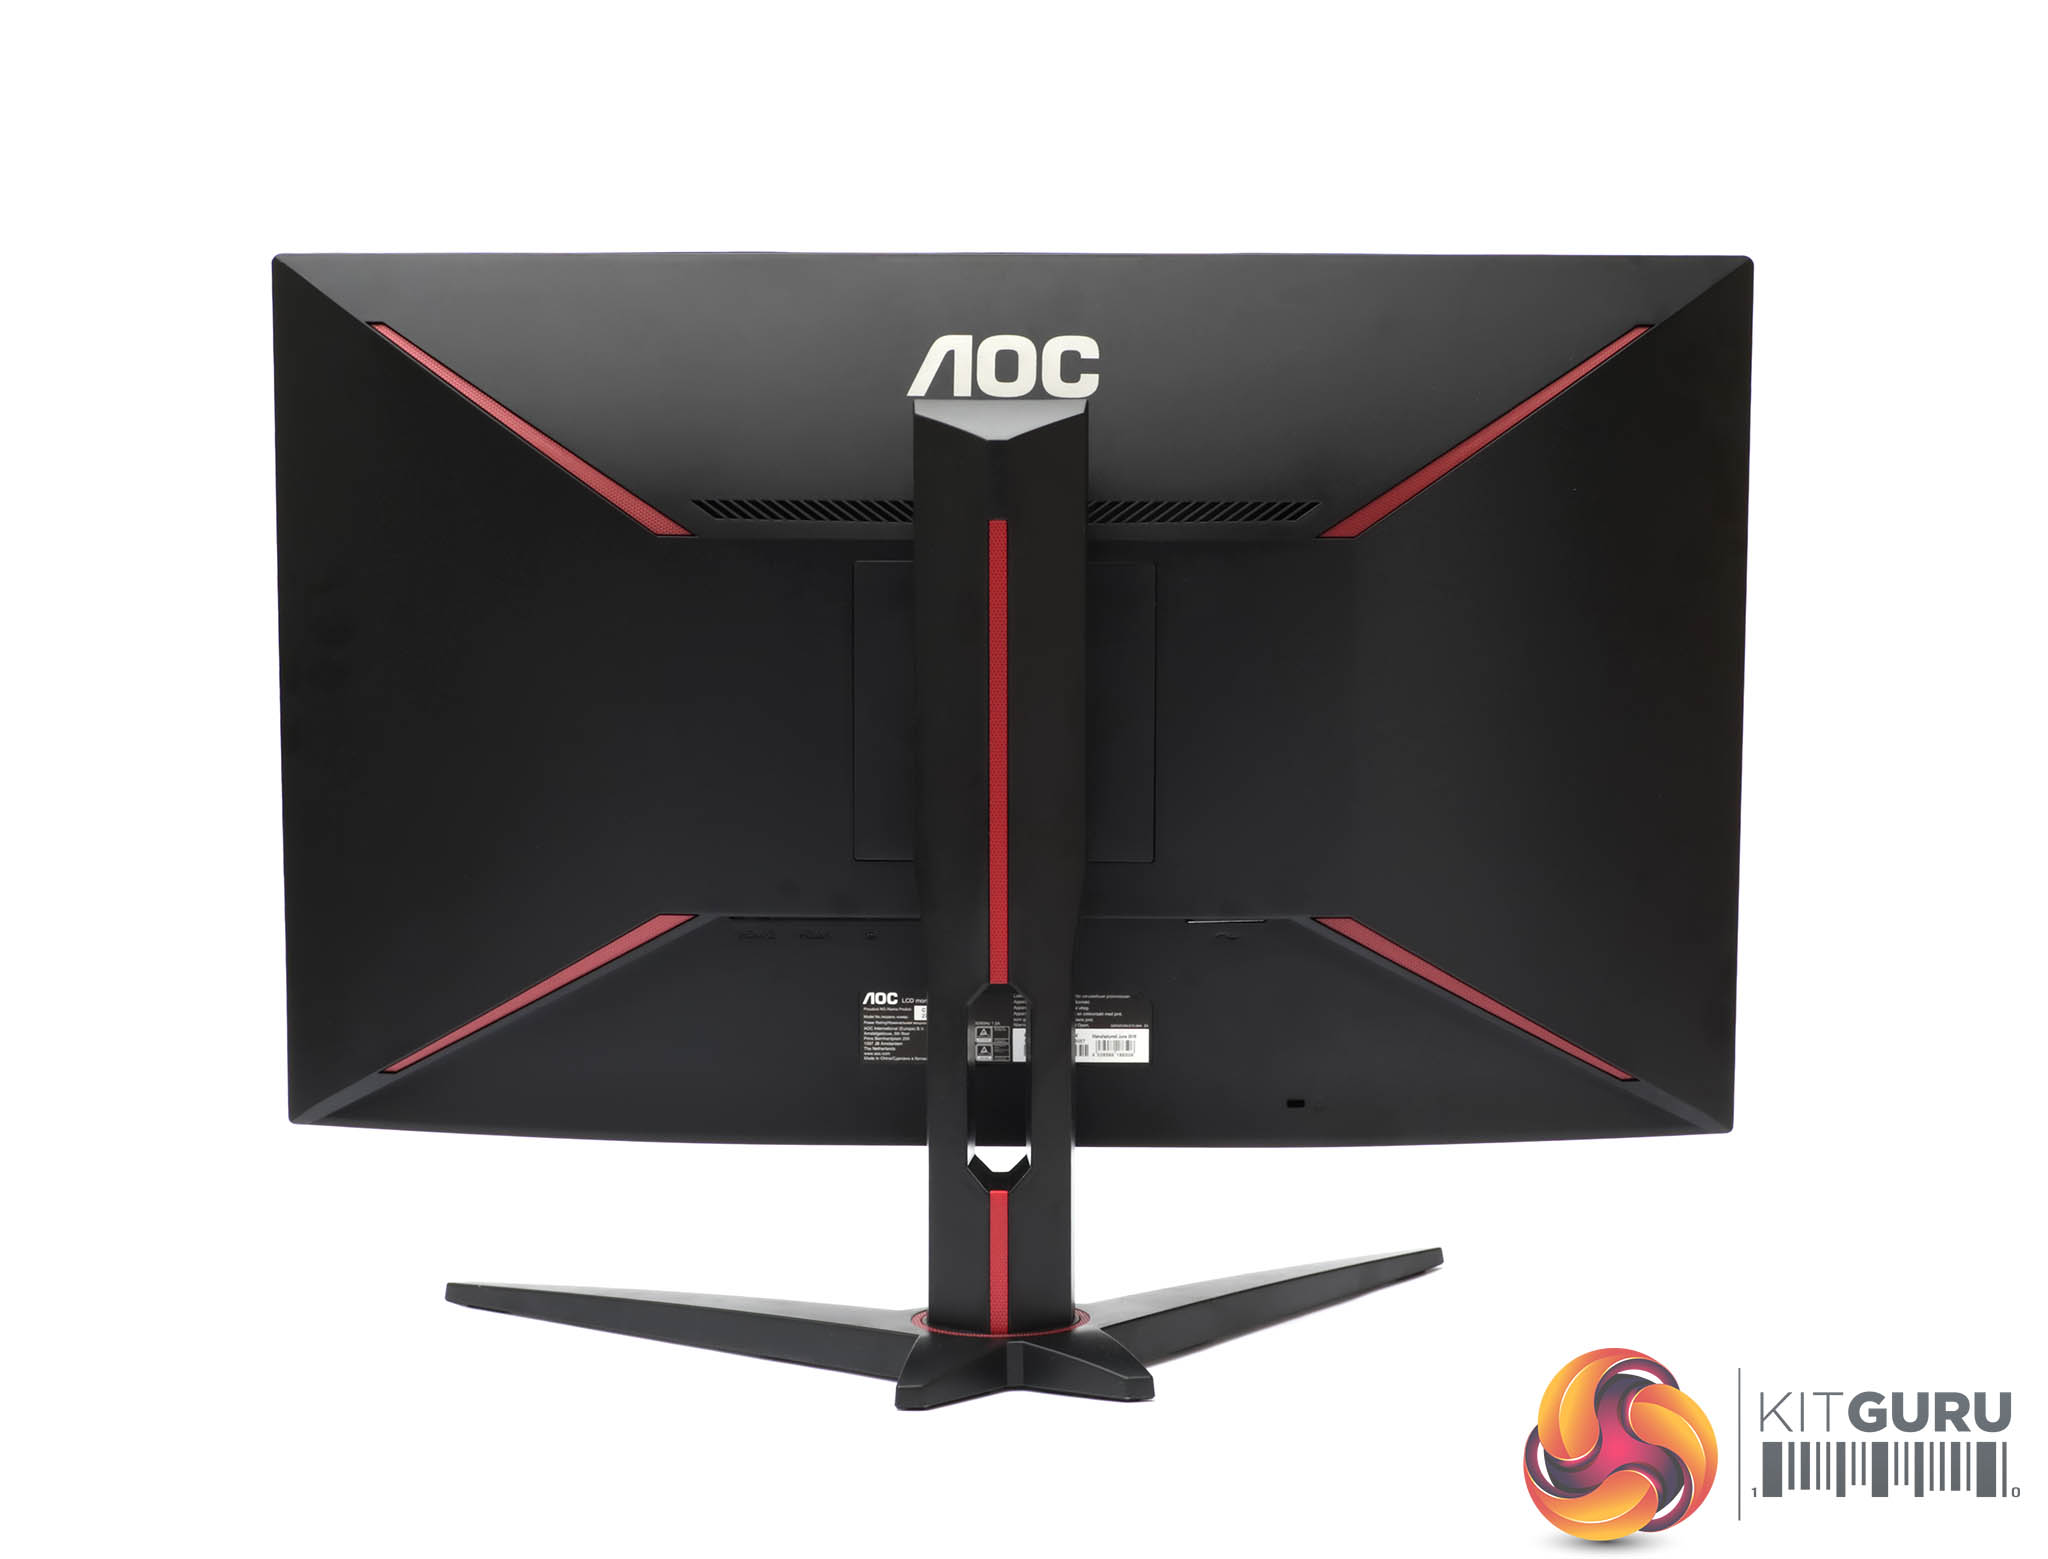 Aoc C27g1 27in Curved 144hz Gaming Monitor Review Kitguru